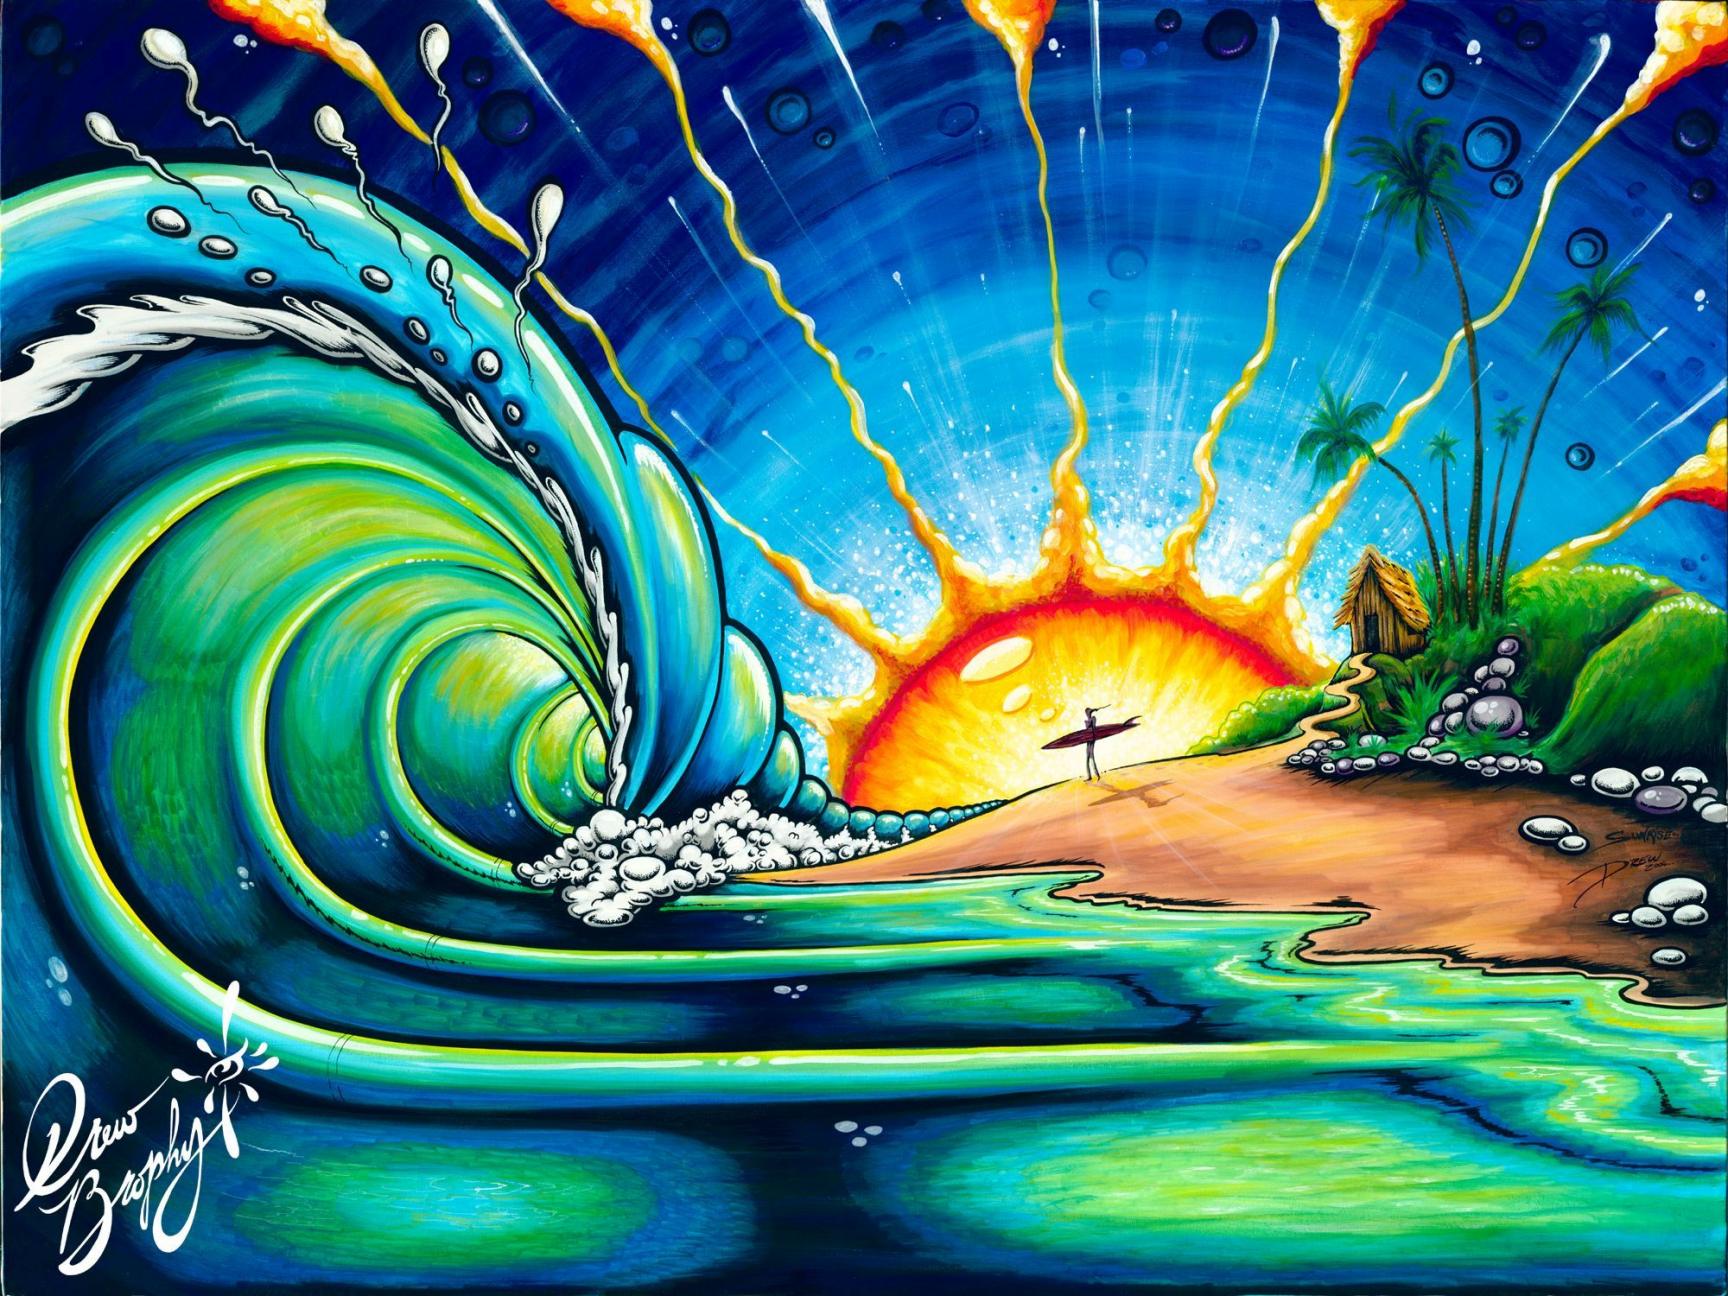 Myrtle Beach Art Museum features Surf Culture artist: Making Waves - A Drew...